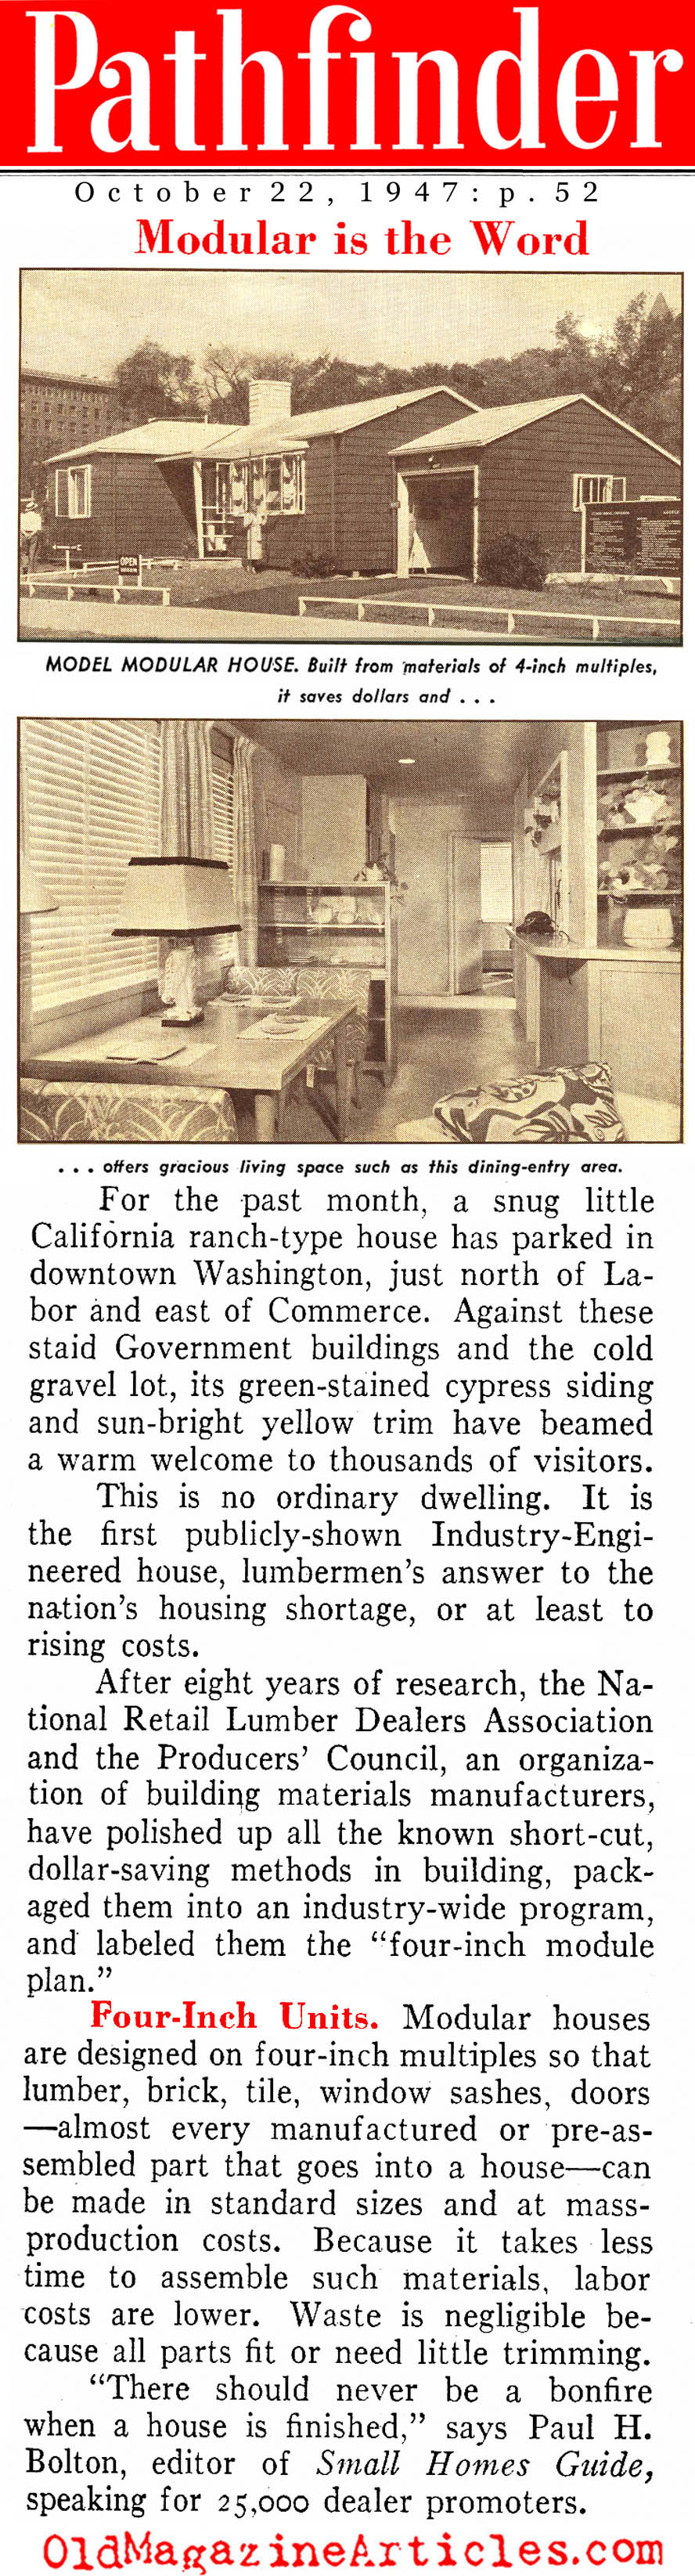 Modular Housing (Pathfinder Magazine, 1947)